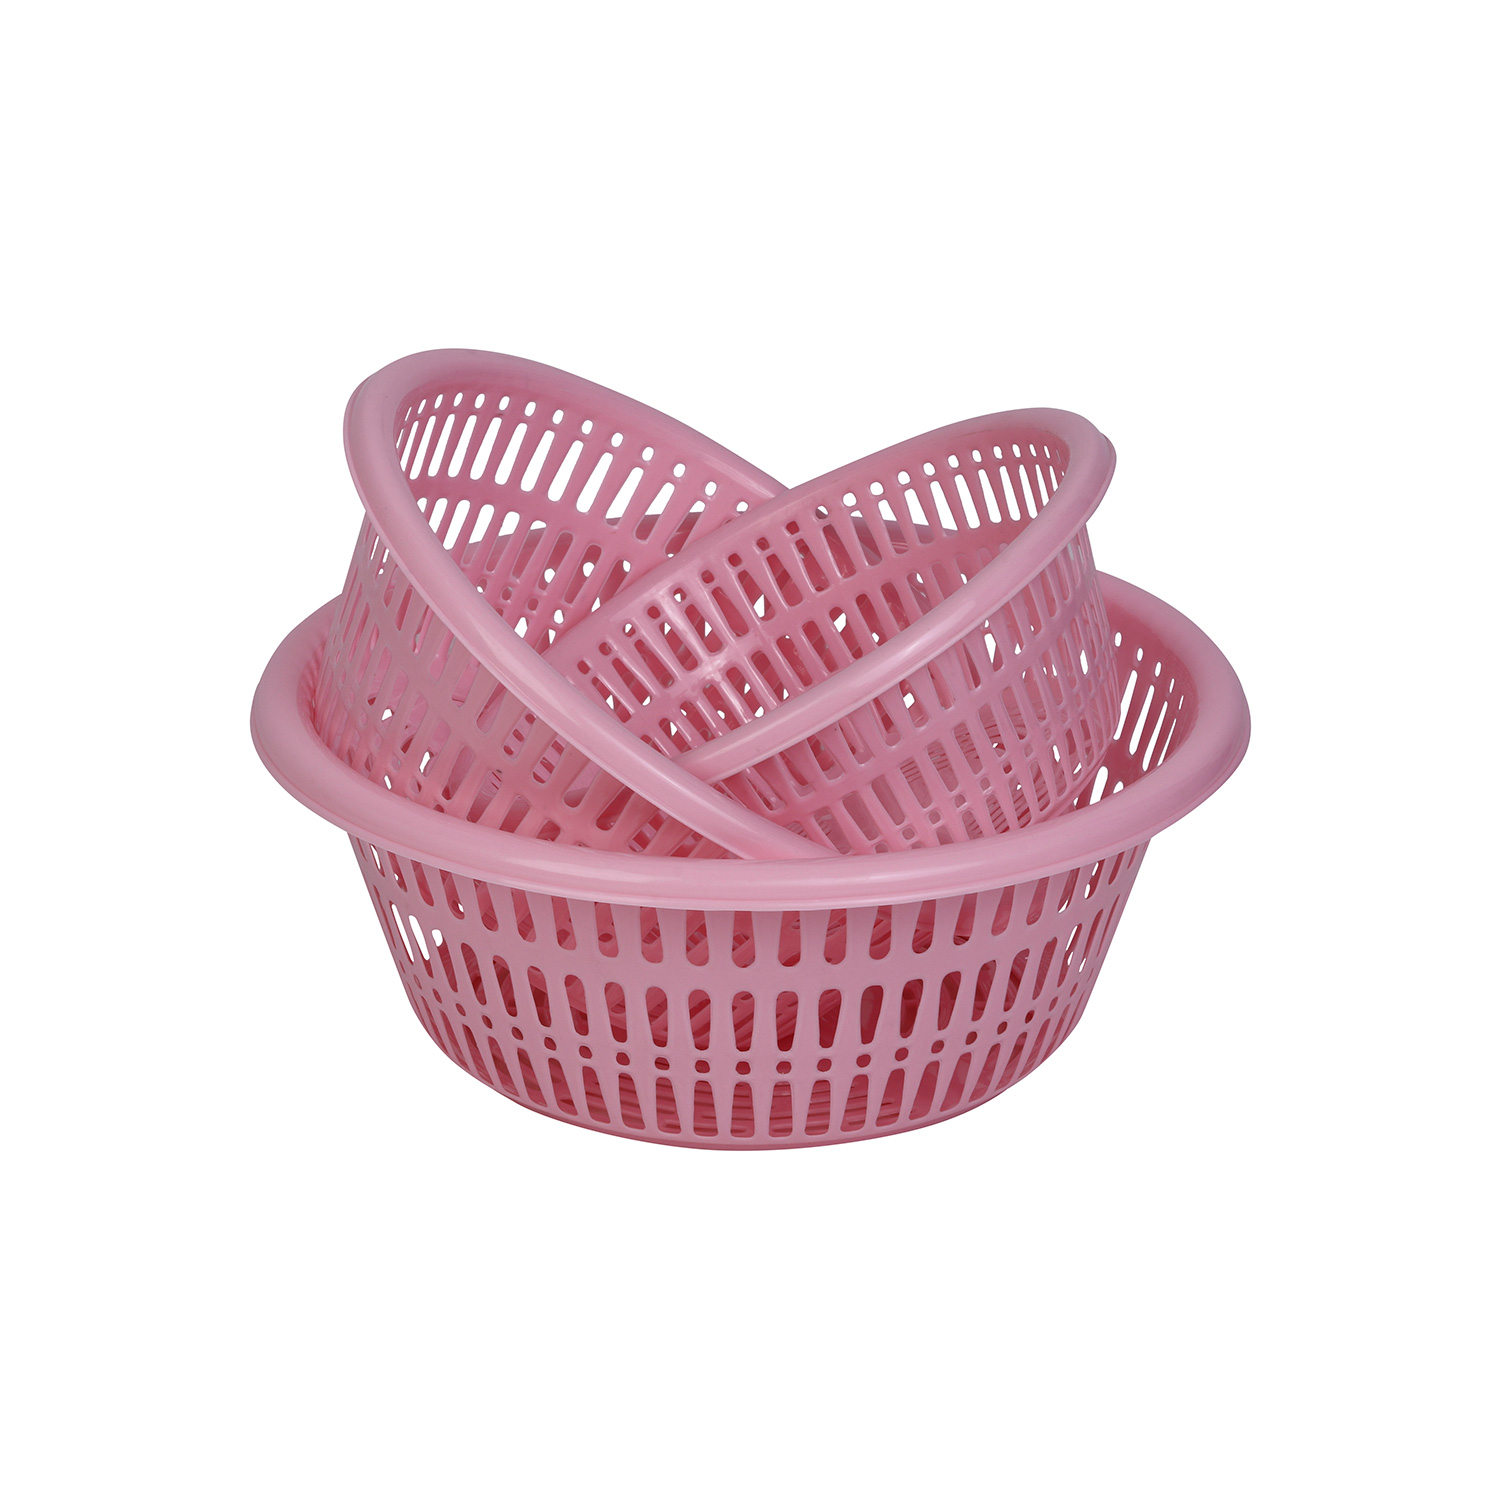 Sukhson India Unbreakable Round Plastic Kitchen Vegetables and Fruits Storage Basket Plastic Fruit & Vegetable Basket (Pink)